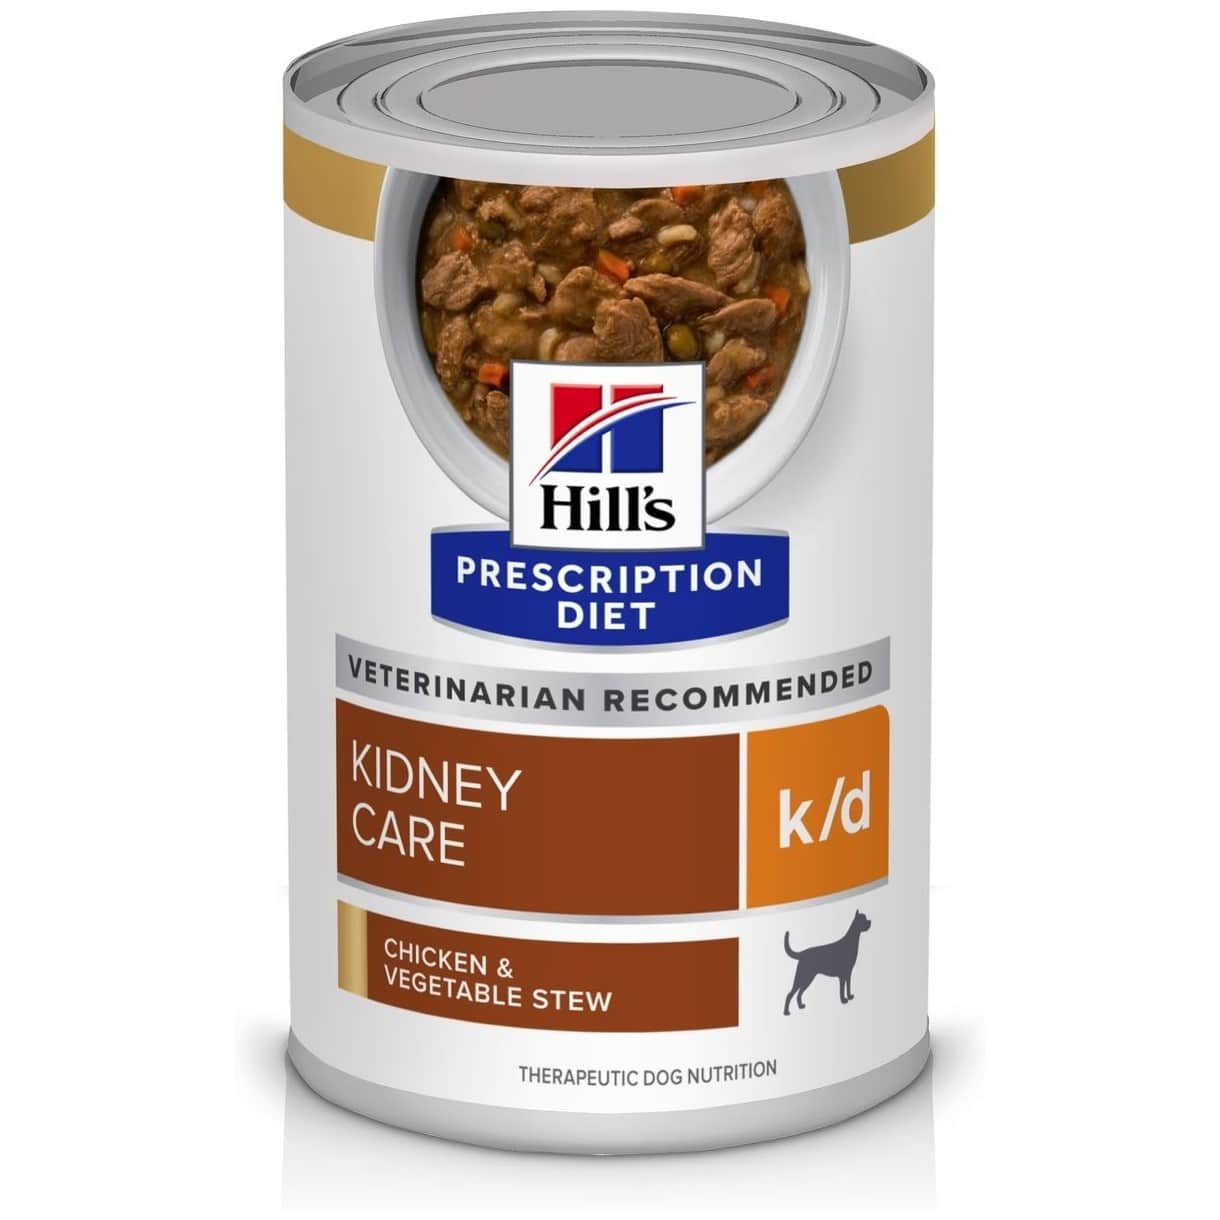 Hill's Prescription Diet k/d Kidney Care Chicken & Vegetable Stew Wet Dog Food